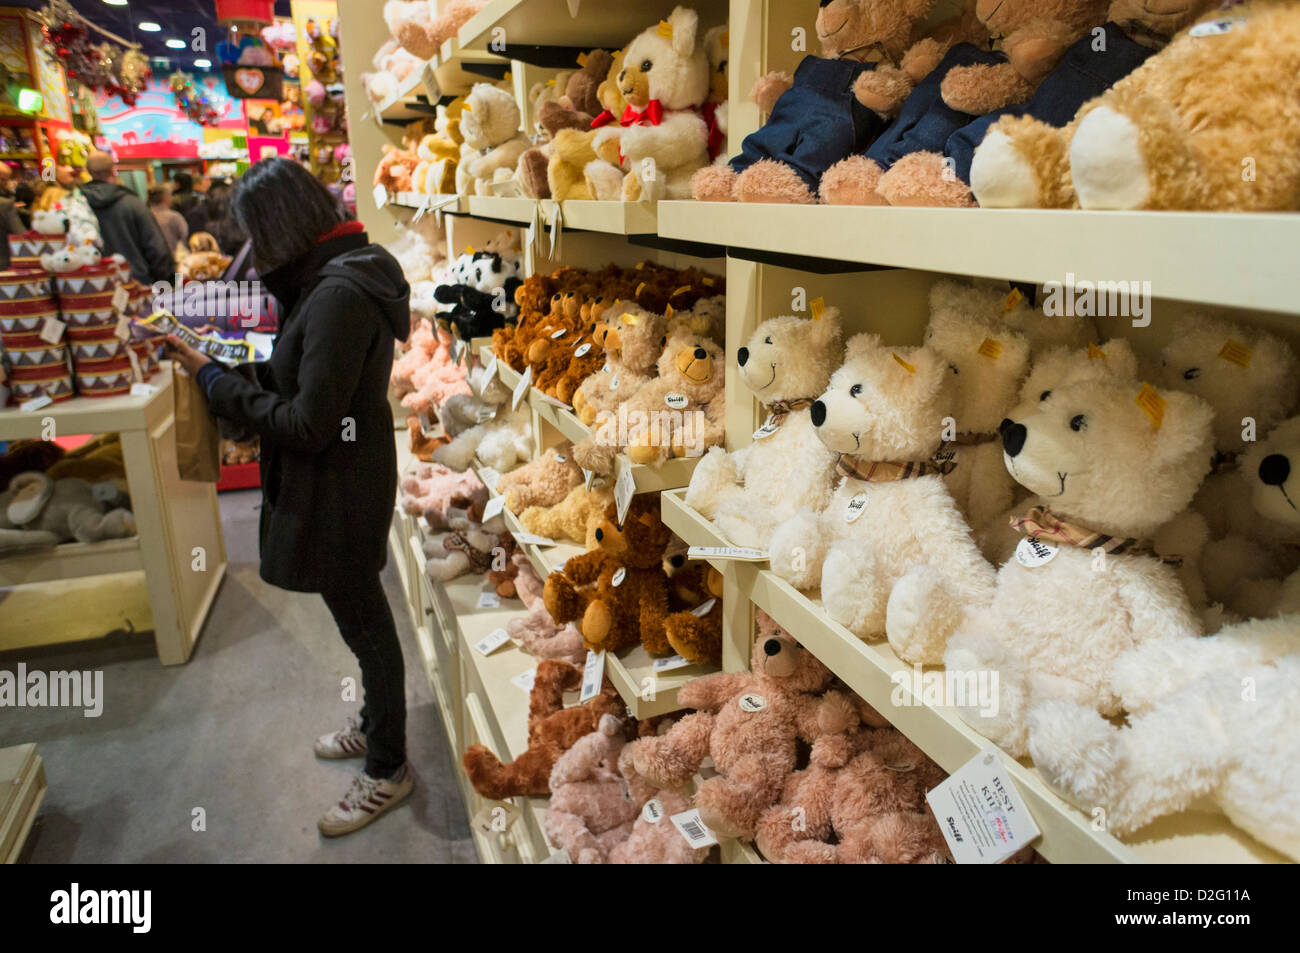 teddy bear shops